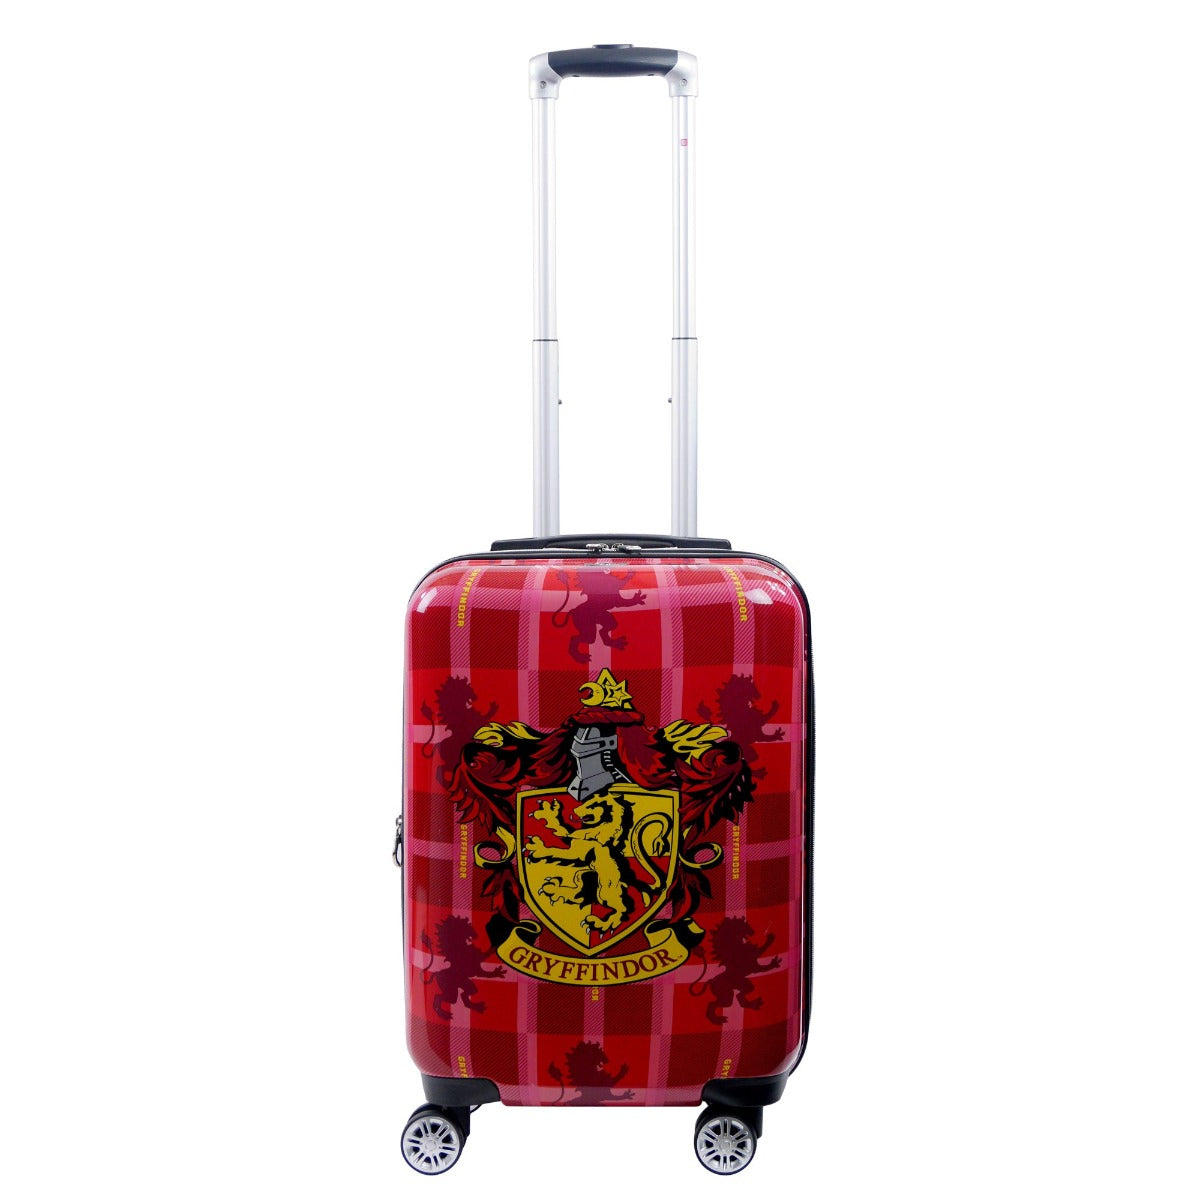 Red Harry Potter Gryffindor 22" hardside spinner suitcase - best carry-on luggage for traveling